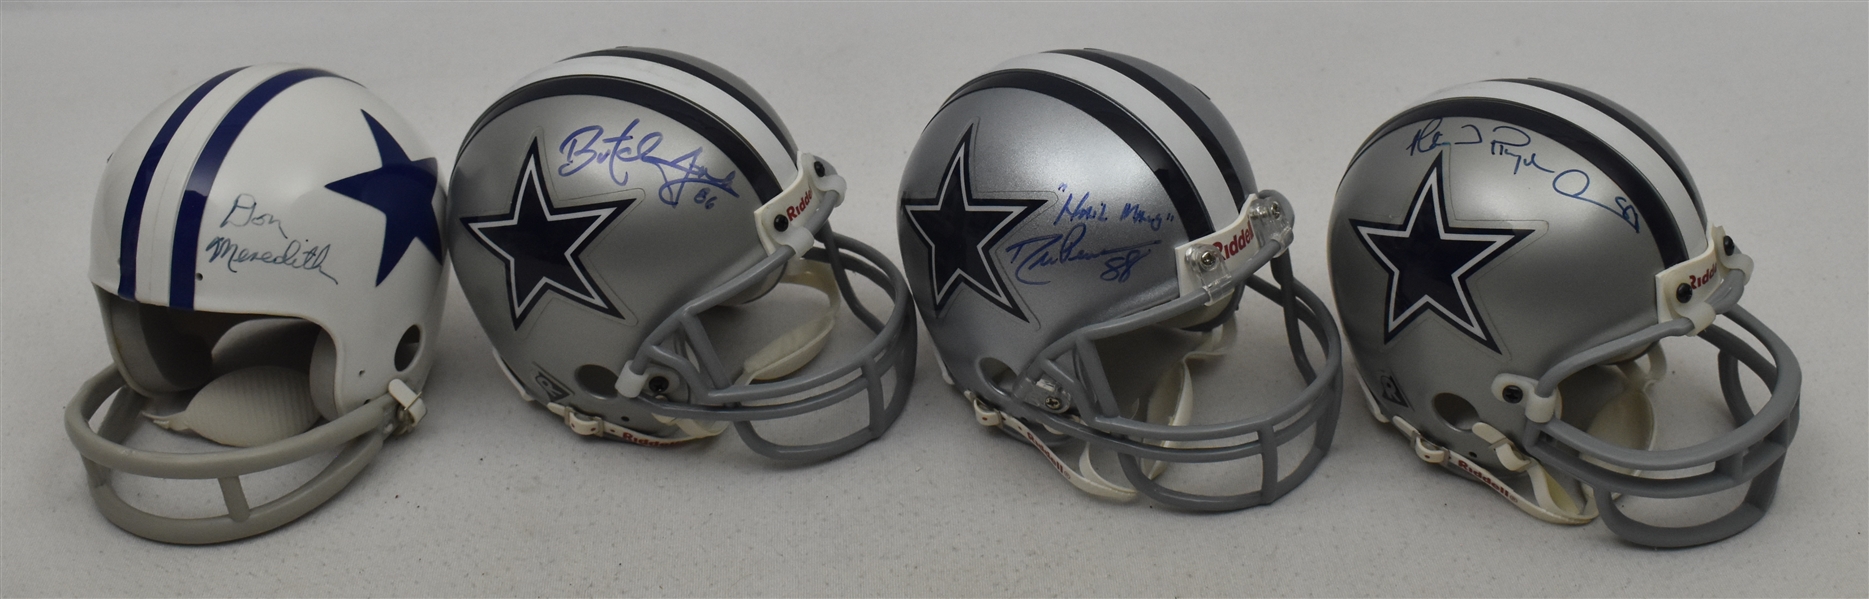 Collection of 4 Dallas Cowboys Autographed Mini Helmets w/Drew Pearson & Michael Irvin